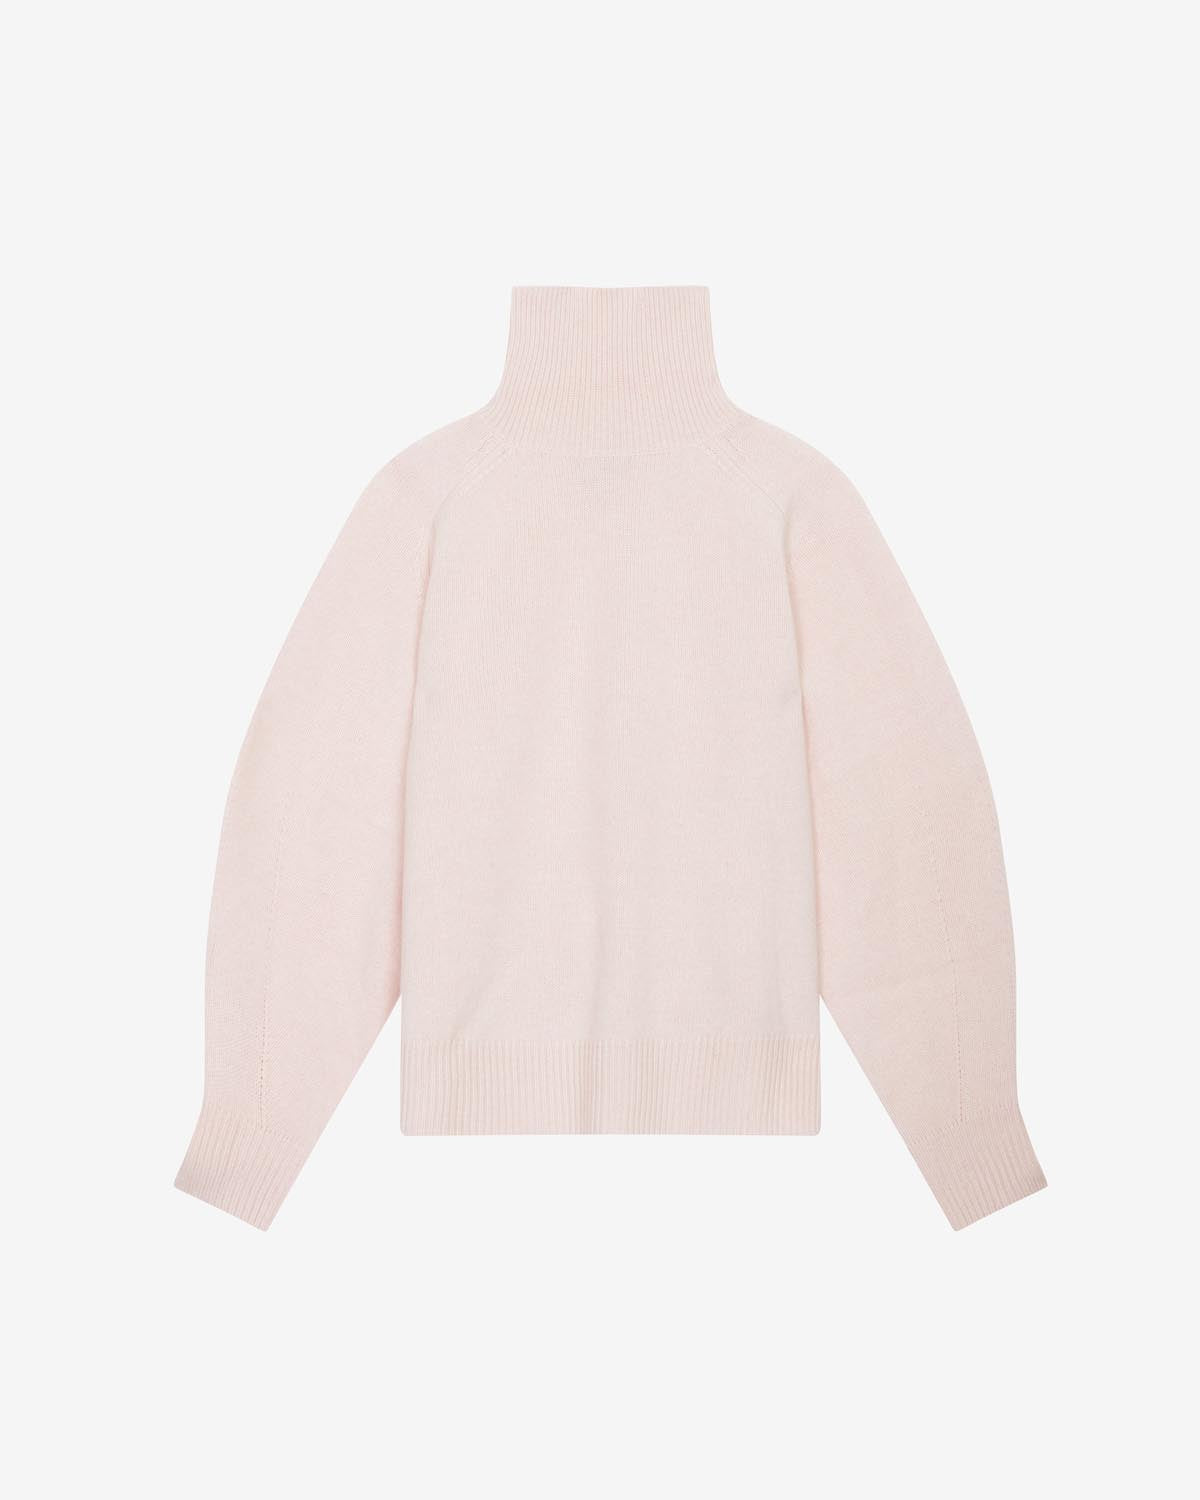 Linelli sweater Woman Light pink 1